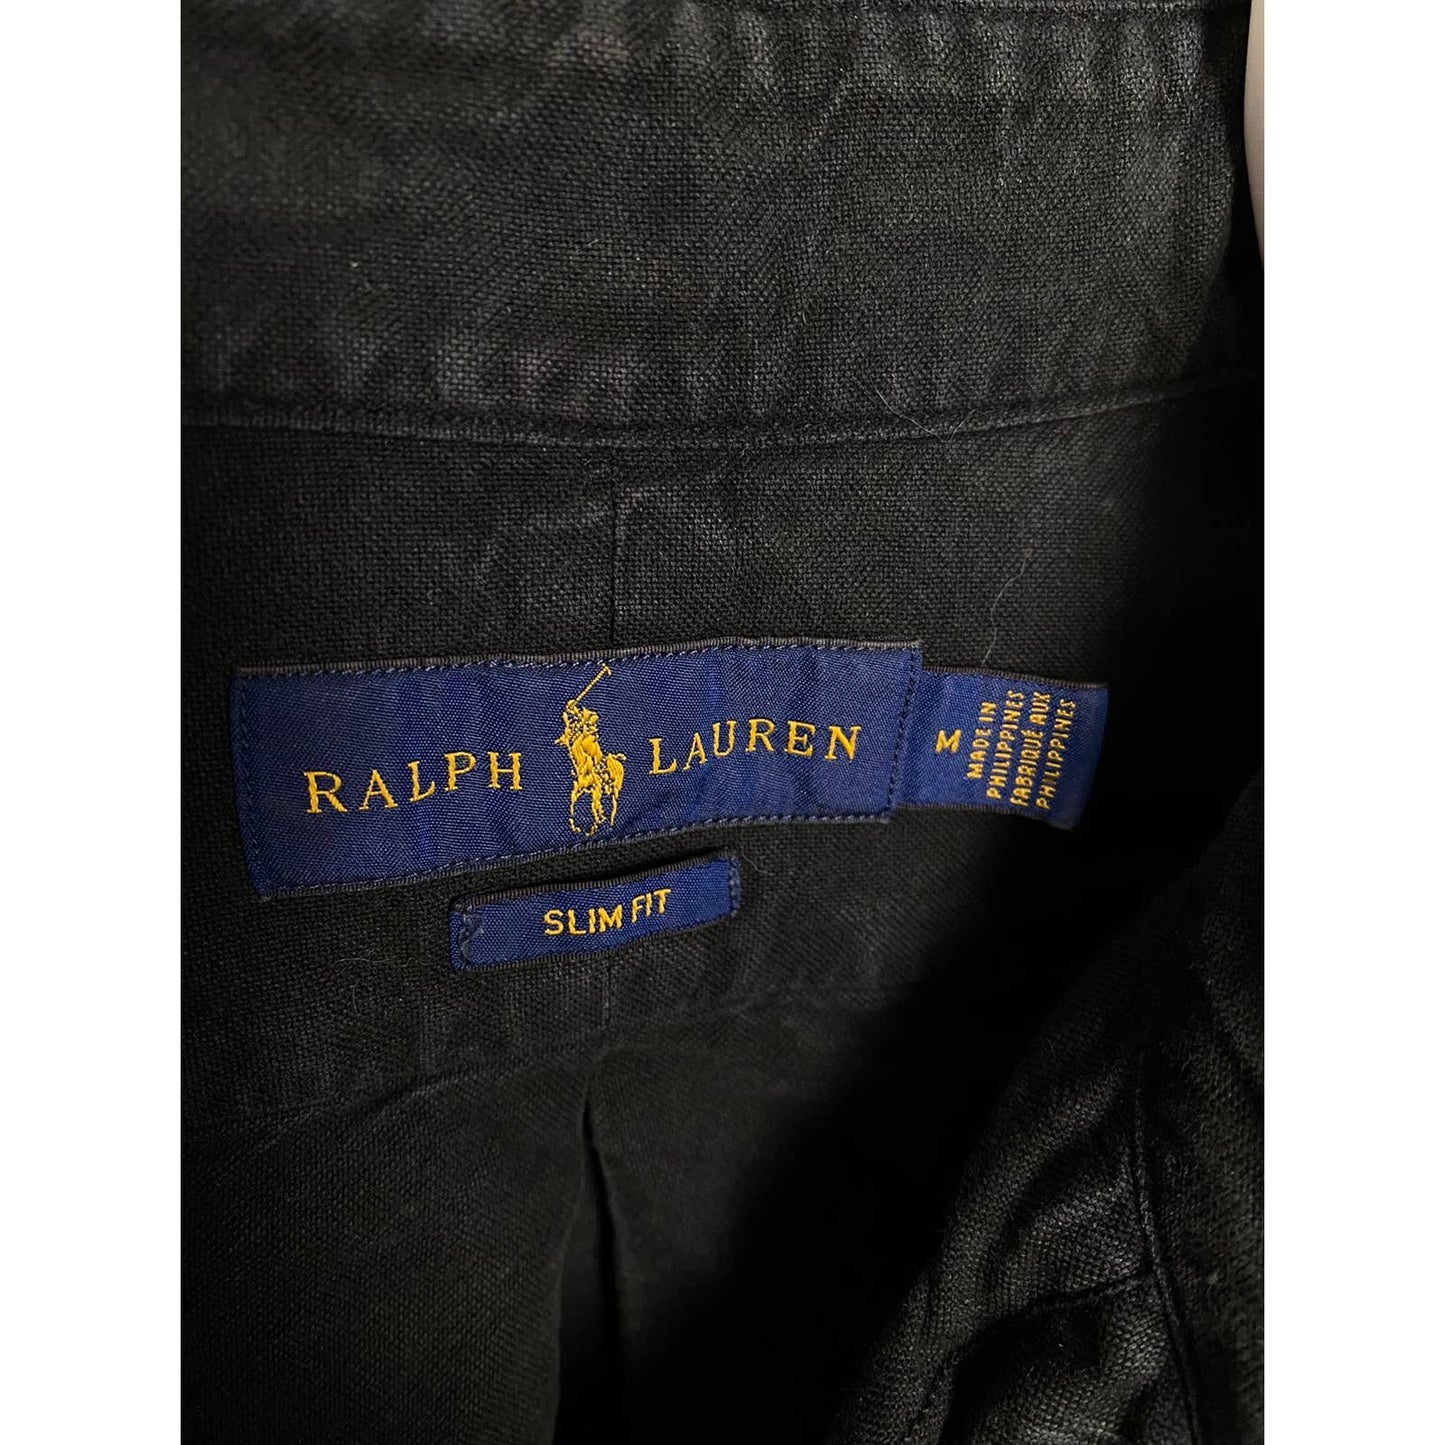 Polo Ralph Lauren Vintage black shirt small pony